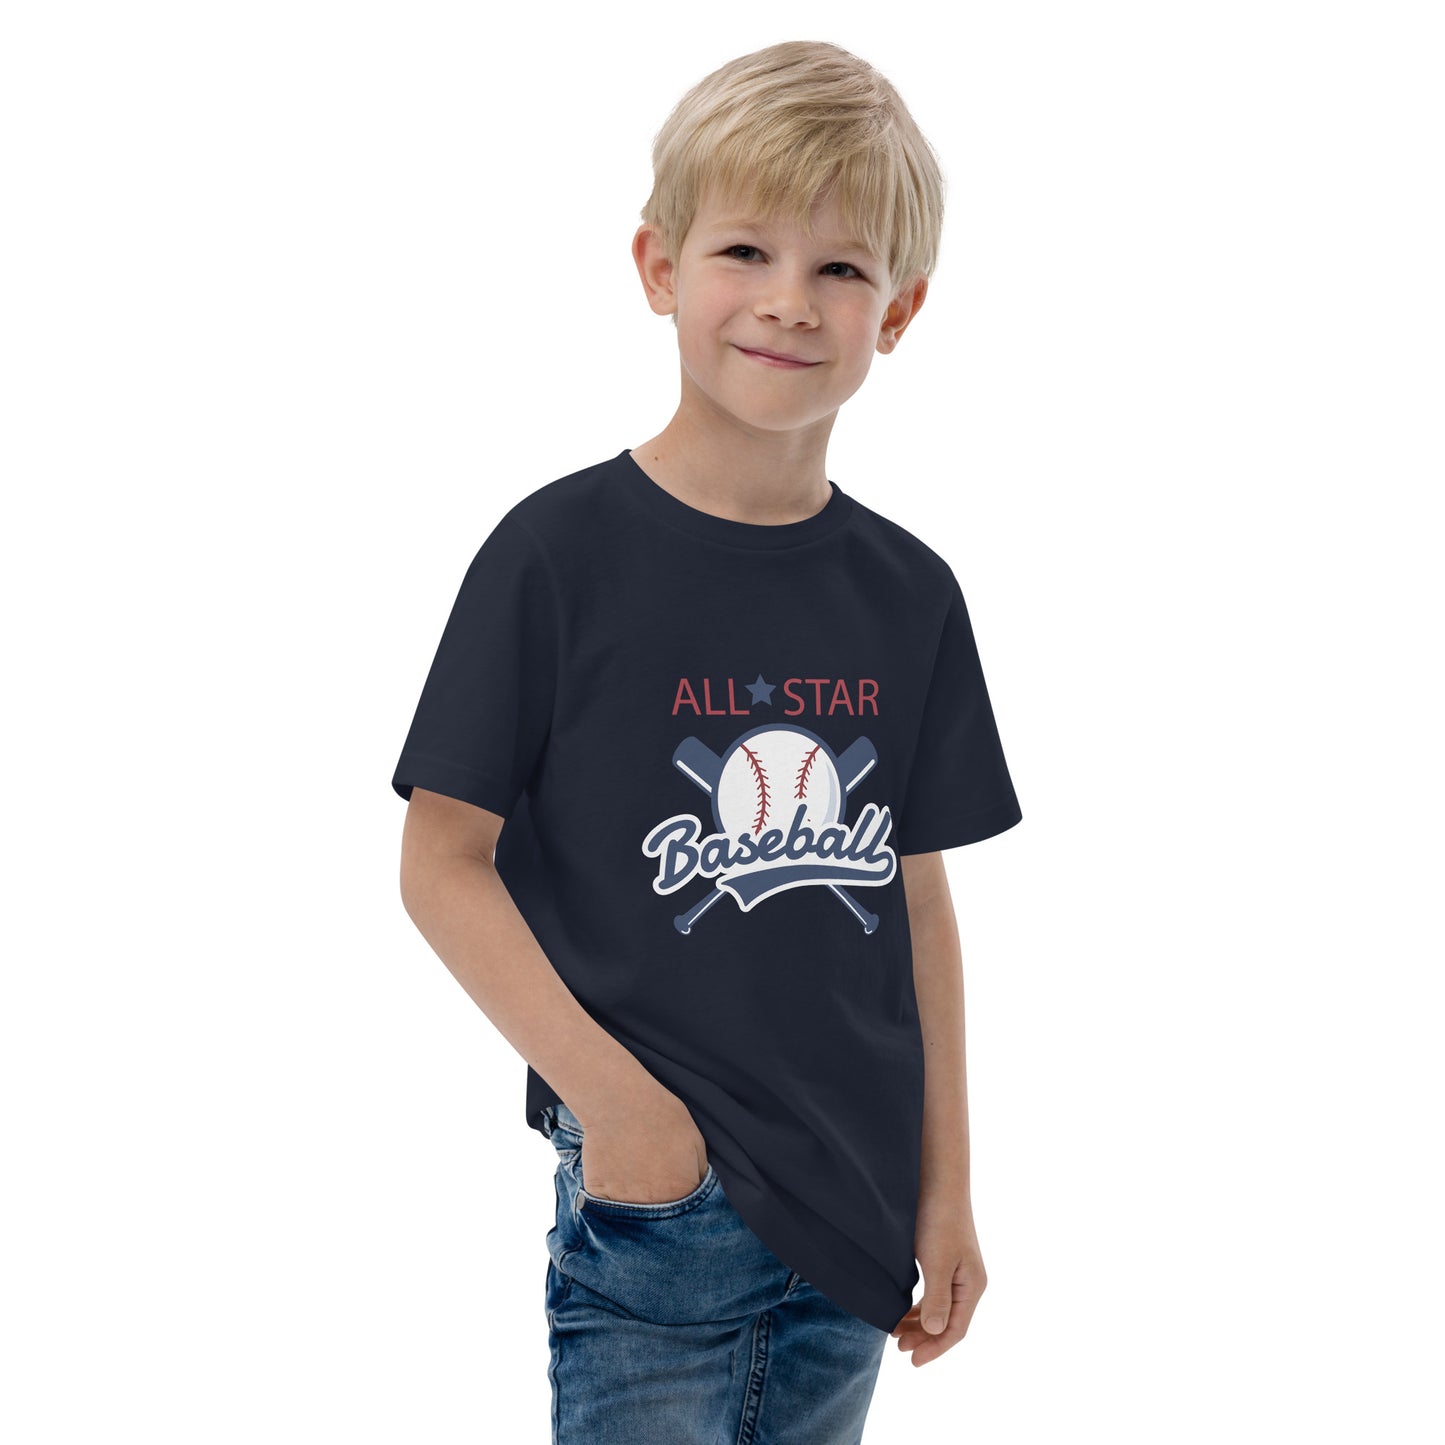 All Star Baseball - Sustainably Made Kids T-shirt